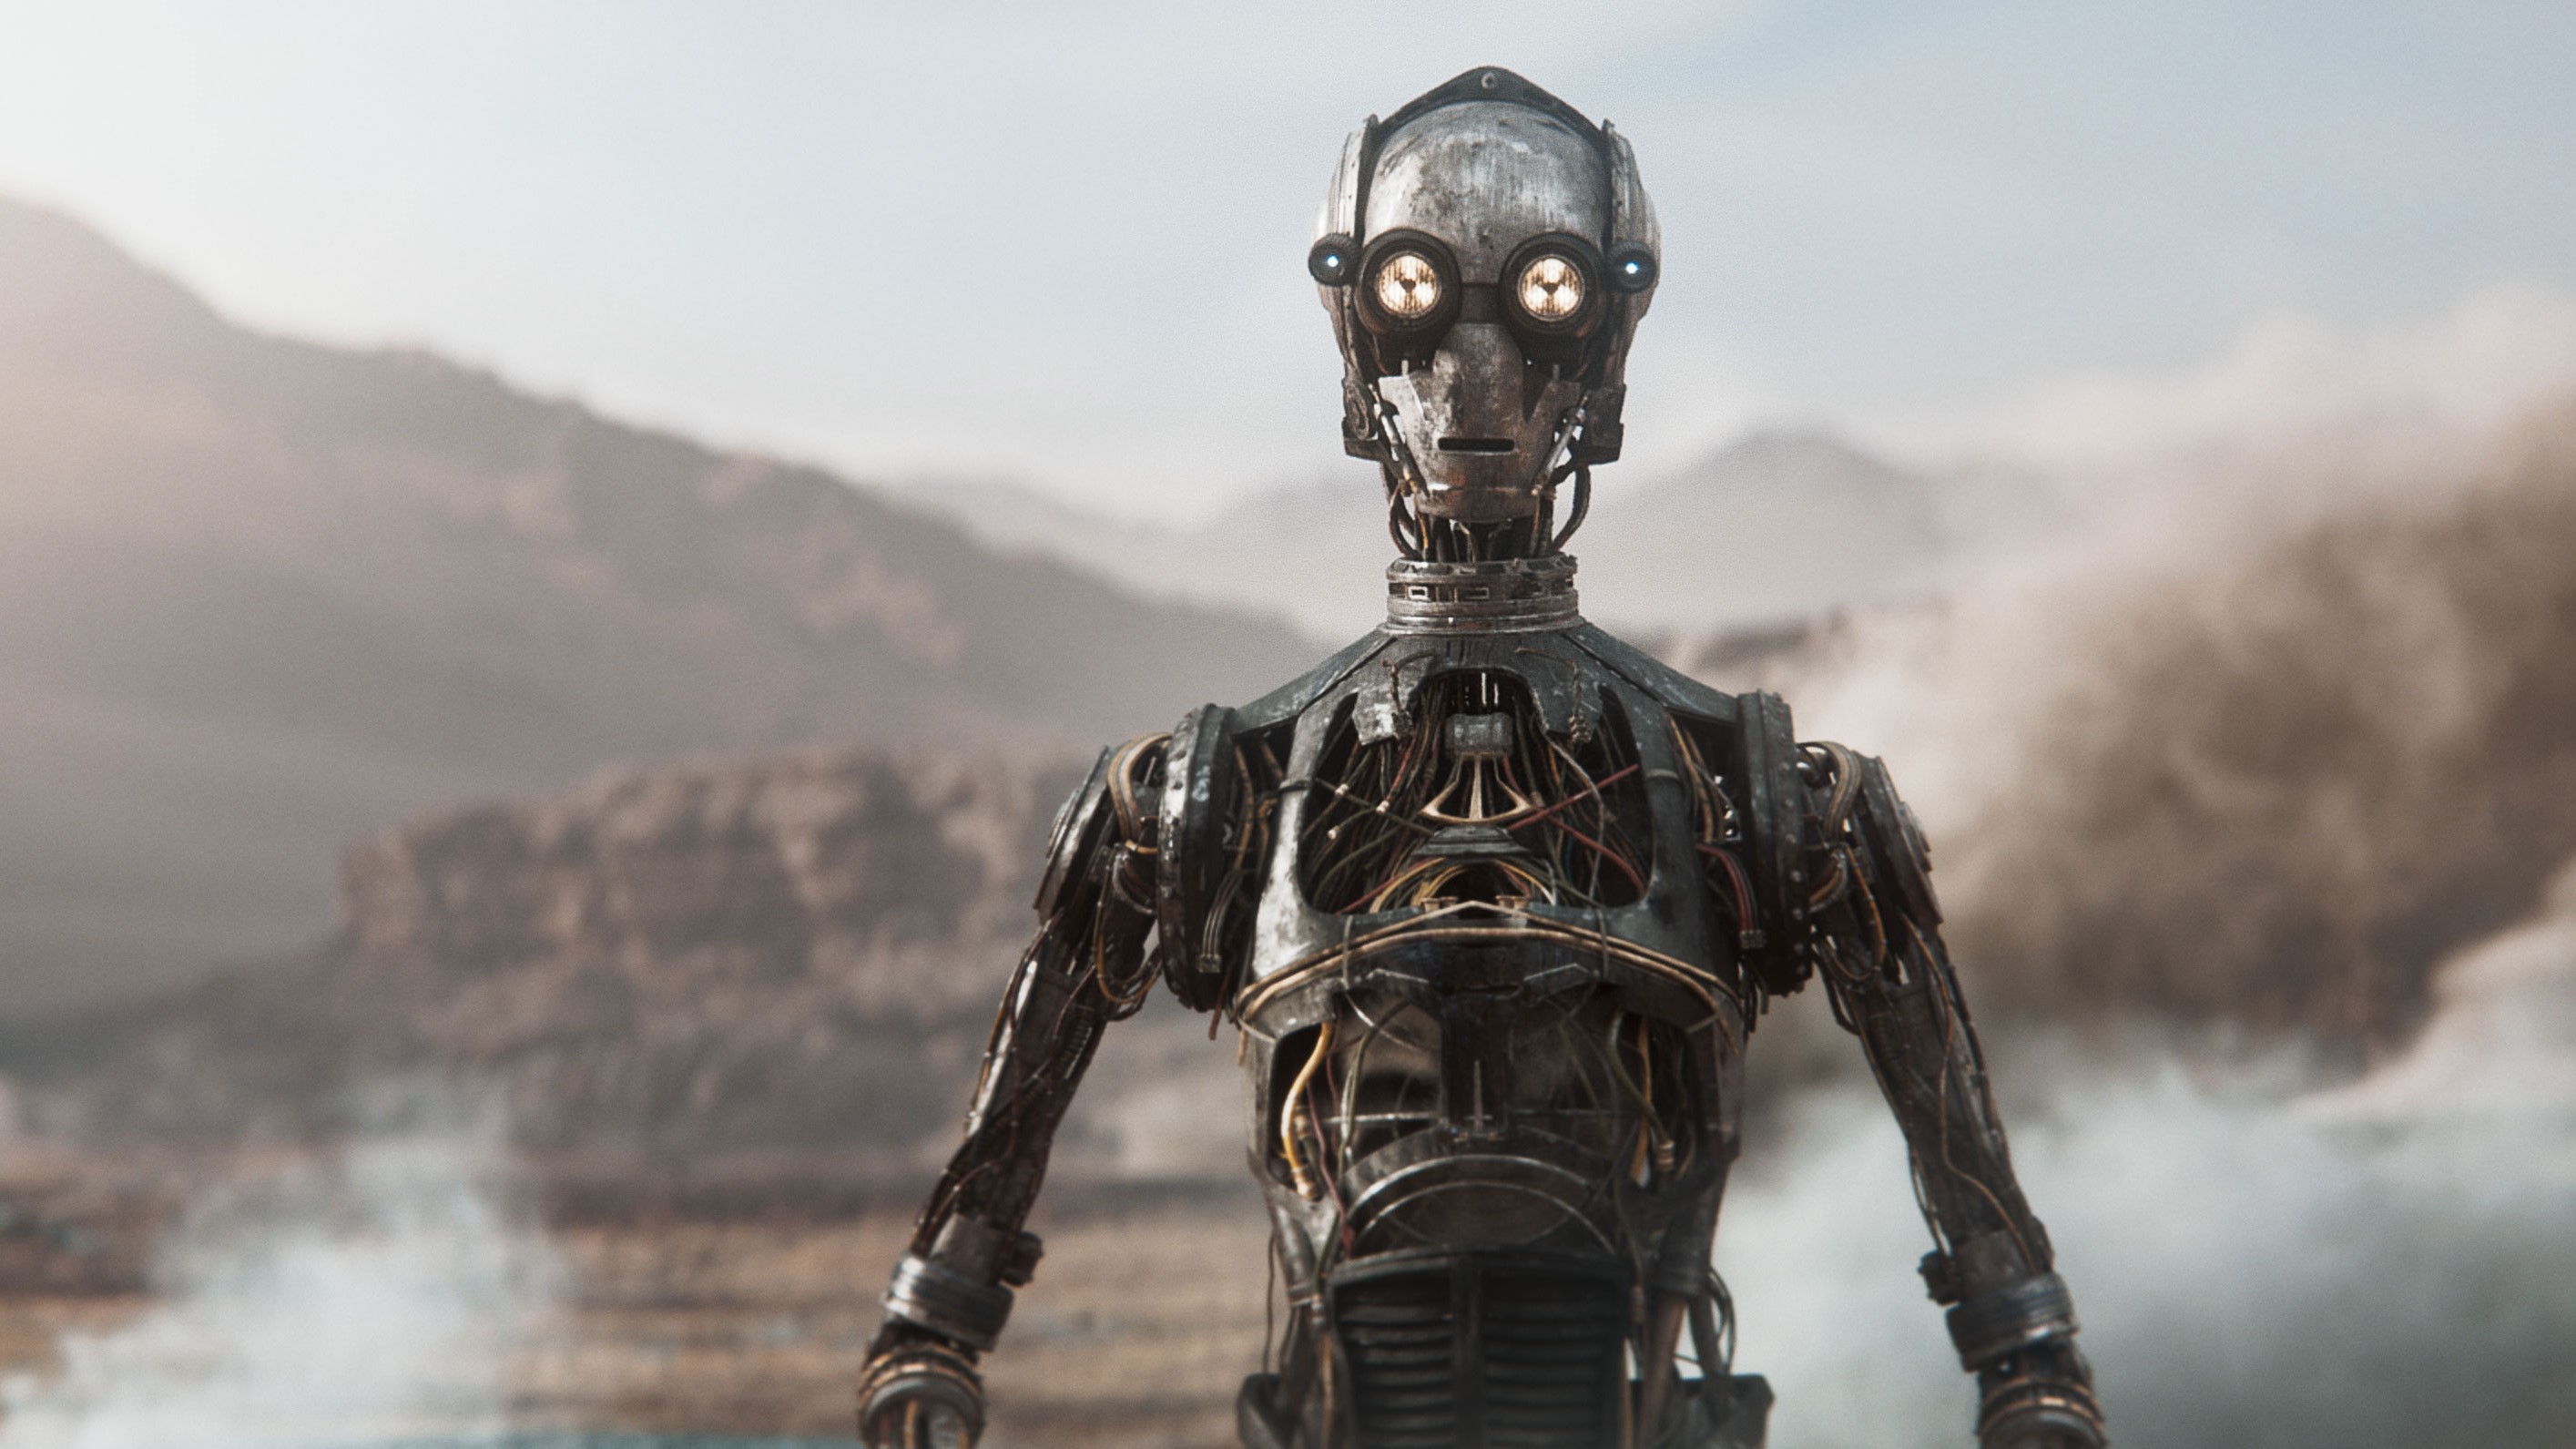 A droid looks across a desolate environment